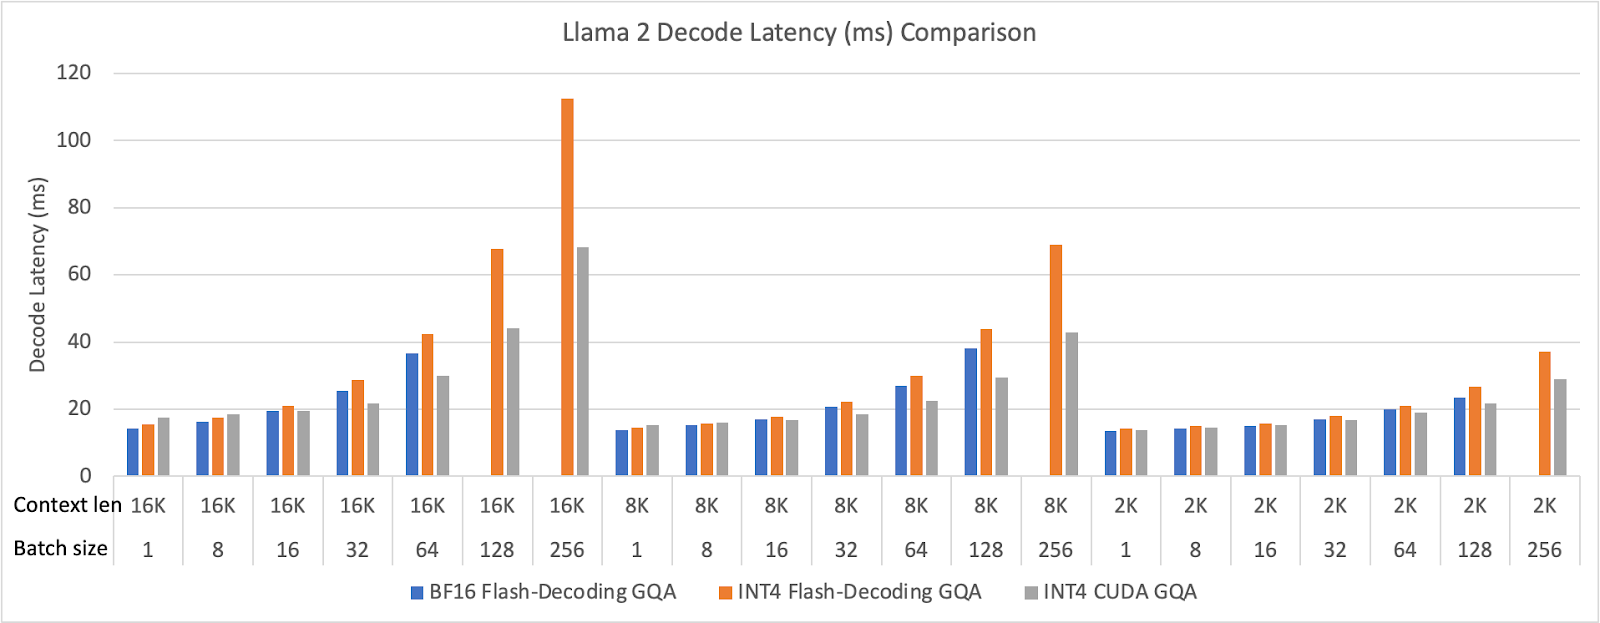 Figure 21: Meta Llama 2 decode latency (ms) comparison